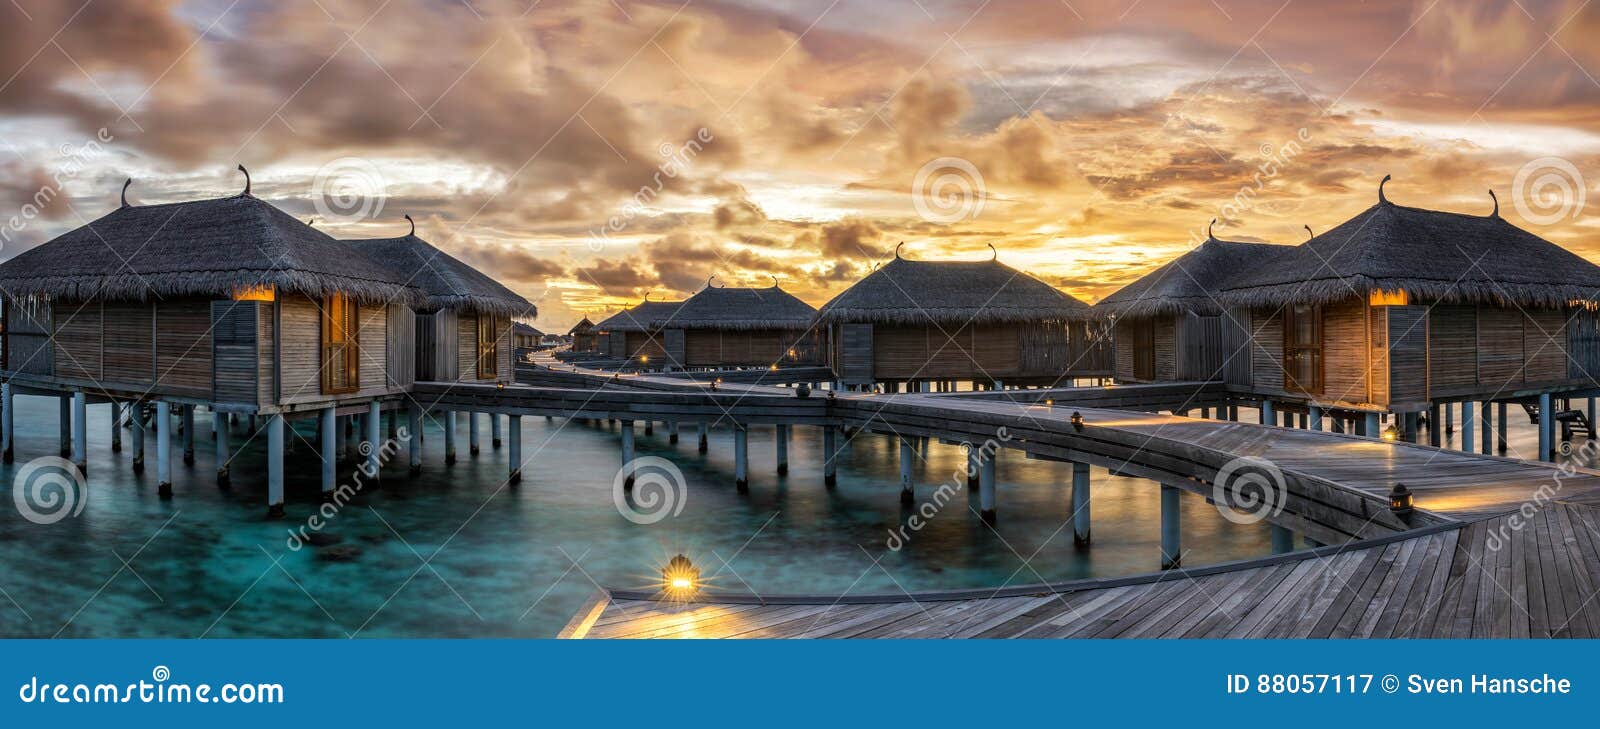 intense sunset over the maldives